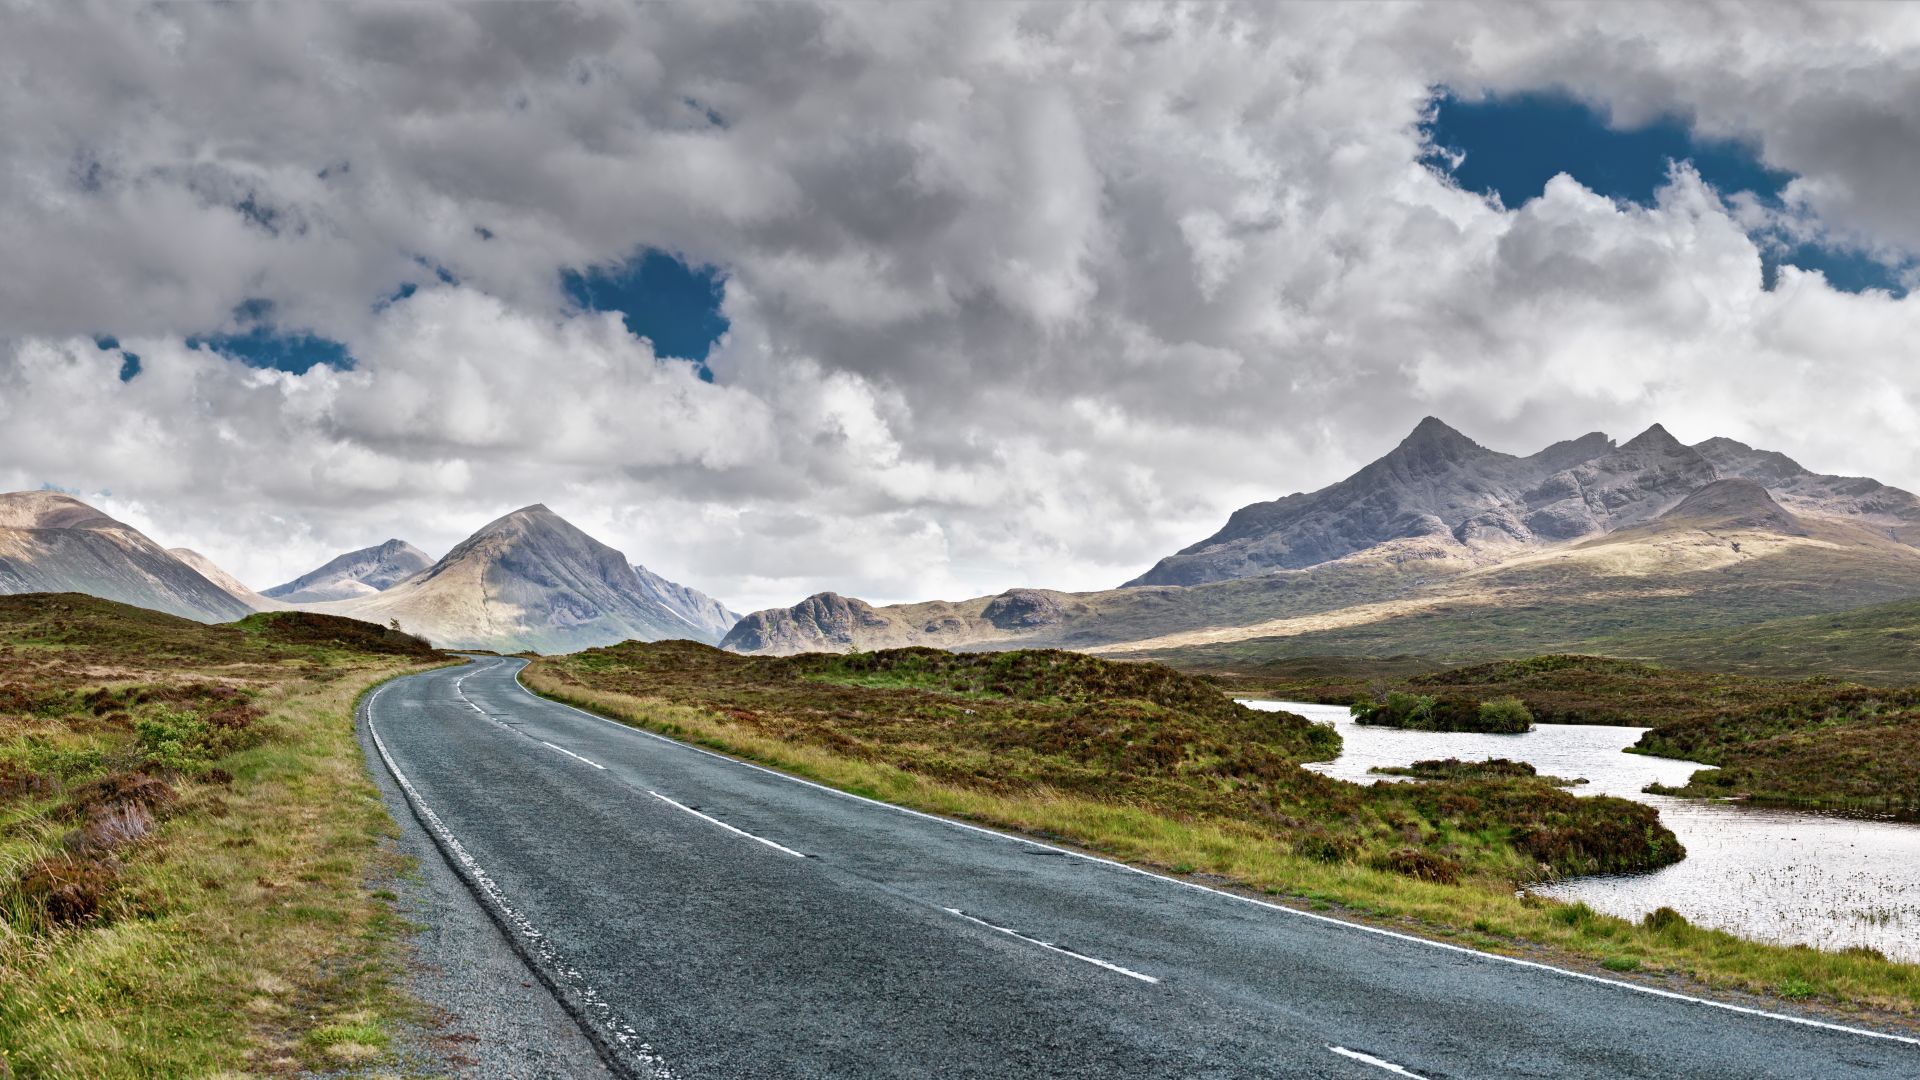 Остров Скай, Шотландия, Isle of Skye, Scotland, Europe, road, mountain, travel, 8k (horizontal)